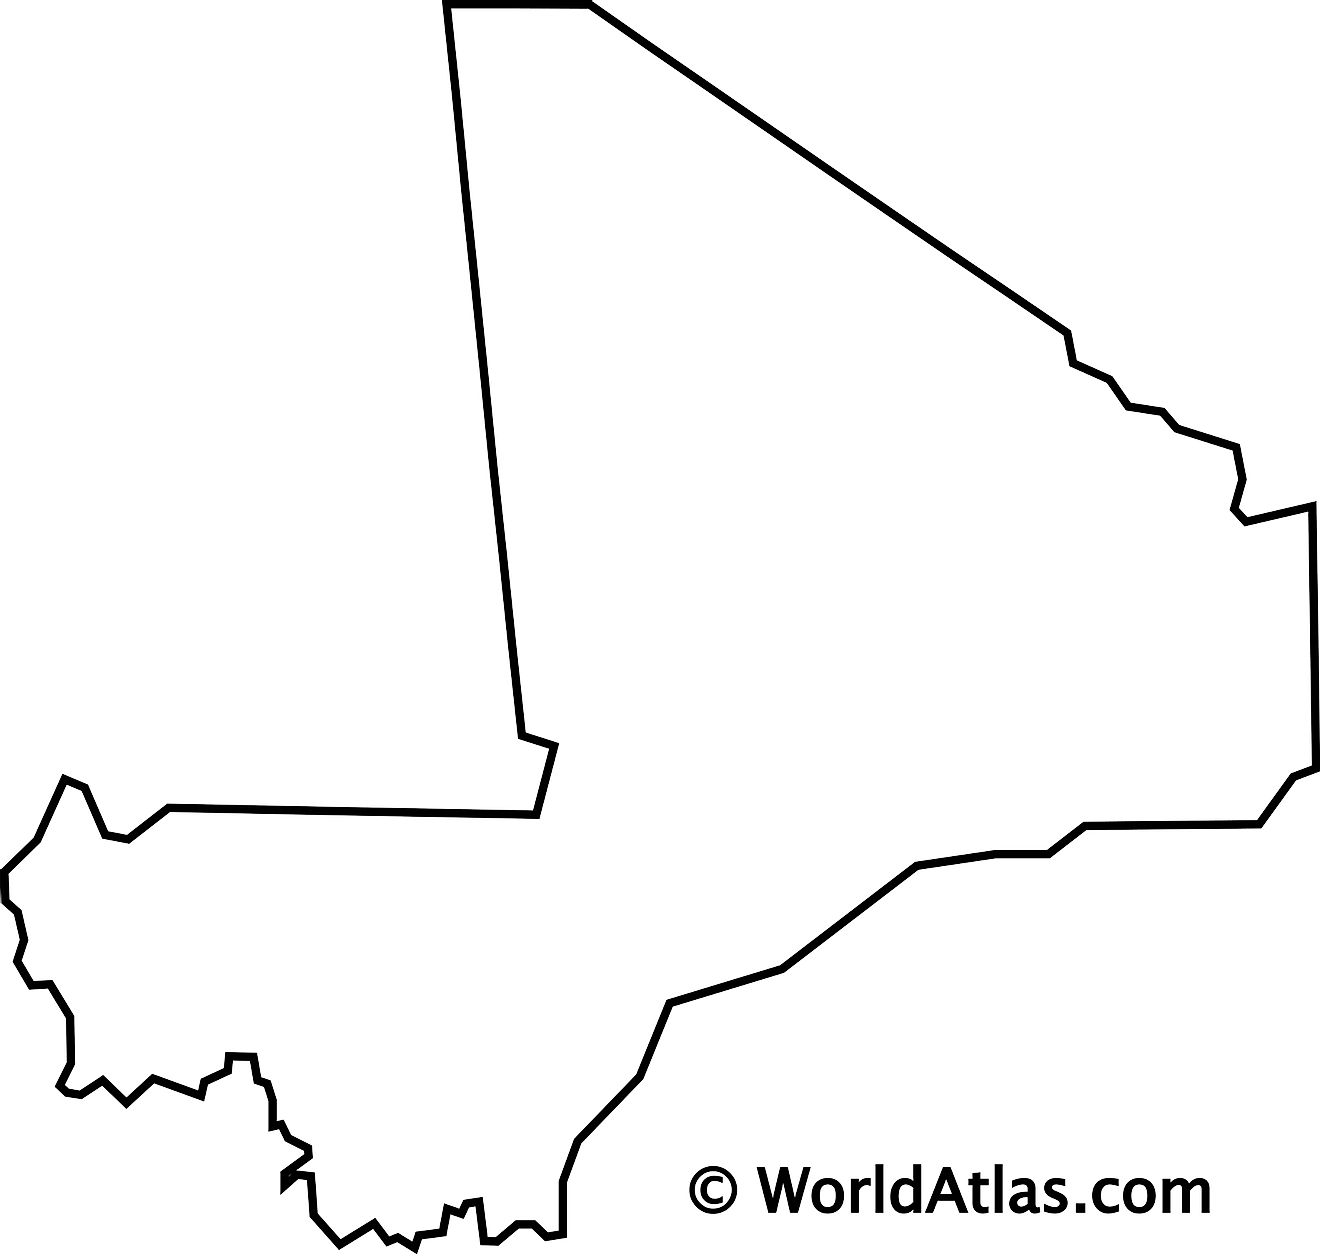 Mapa de contorno en blanco de Malí